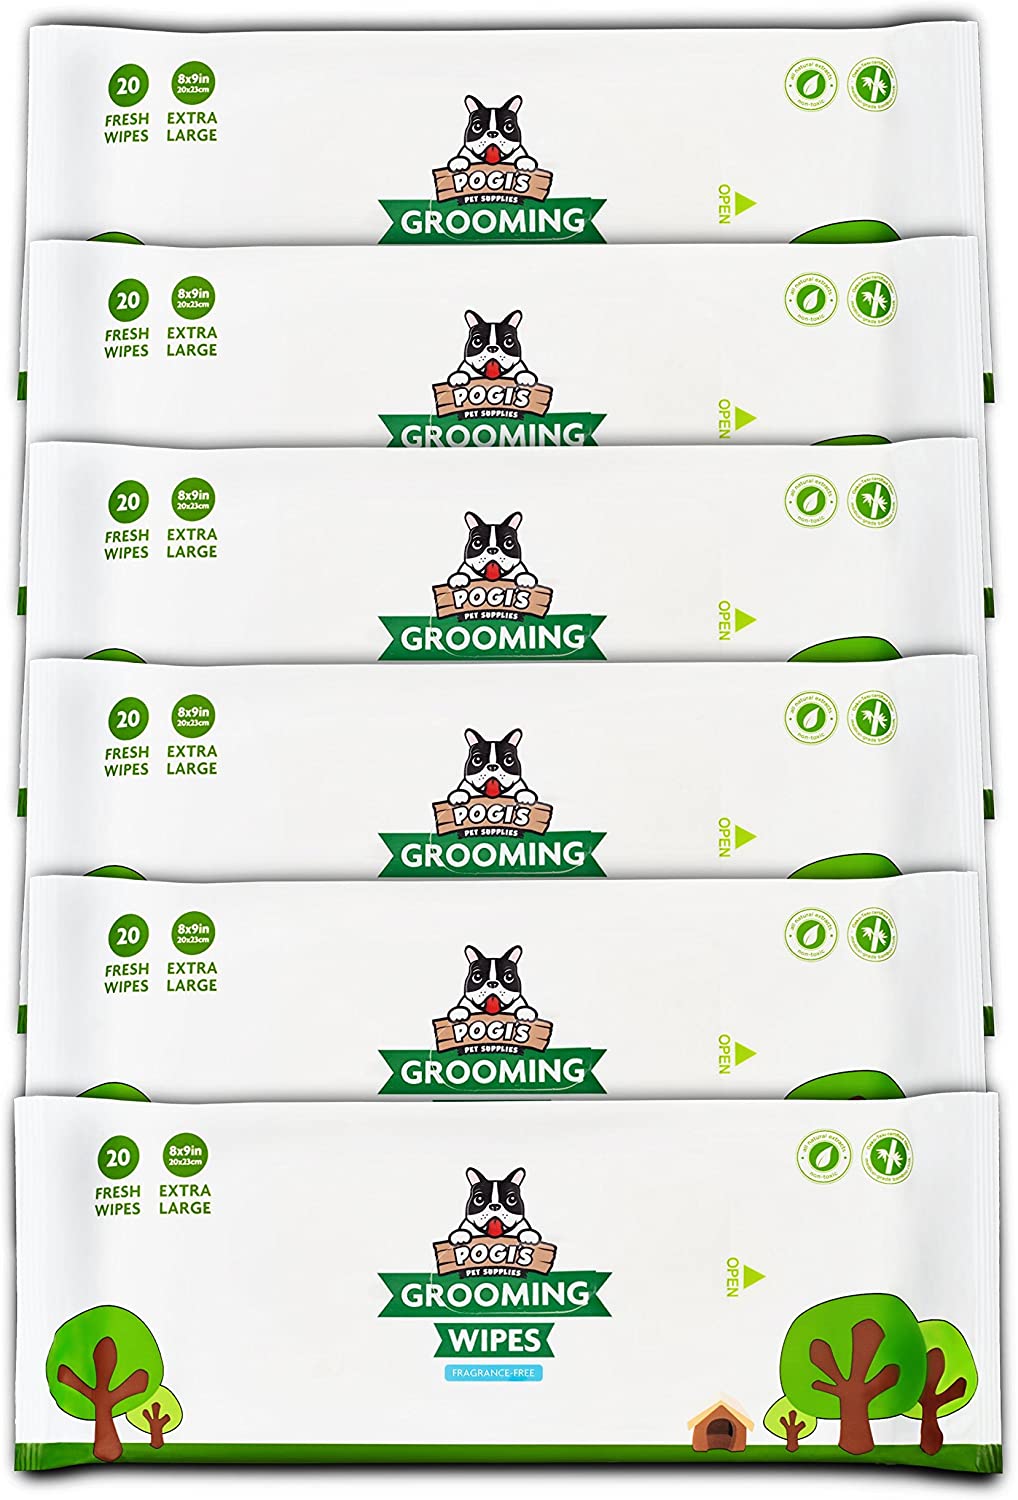  Pogi's Grooming Wipes Paquete de Viaje - 120 toallitas desodorantes para Perros - No perfumadas, Naturales, Extra Grandes, Biodegradable 